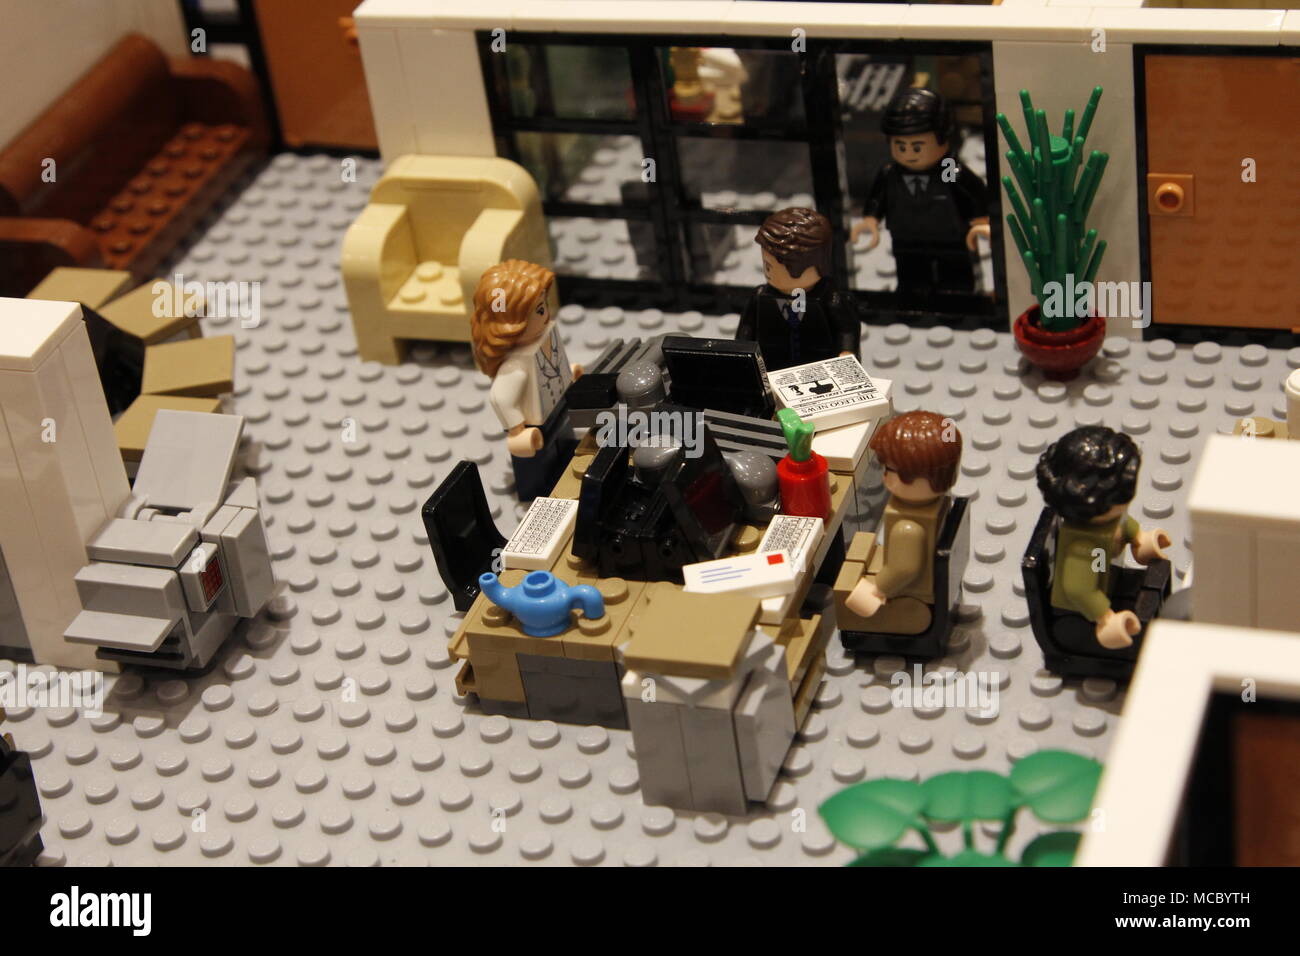 Lego Workplace diorama scene Stock Photo - Alamy